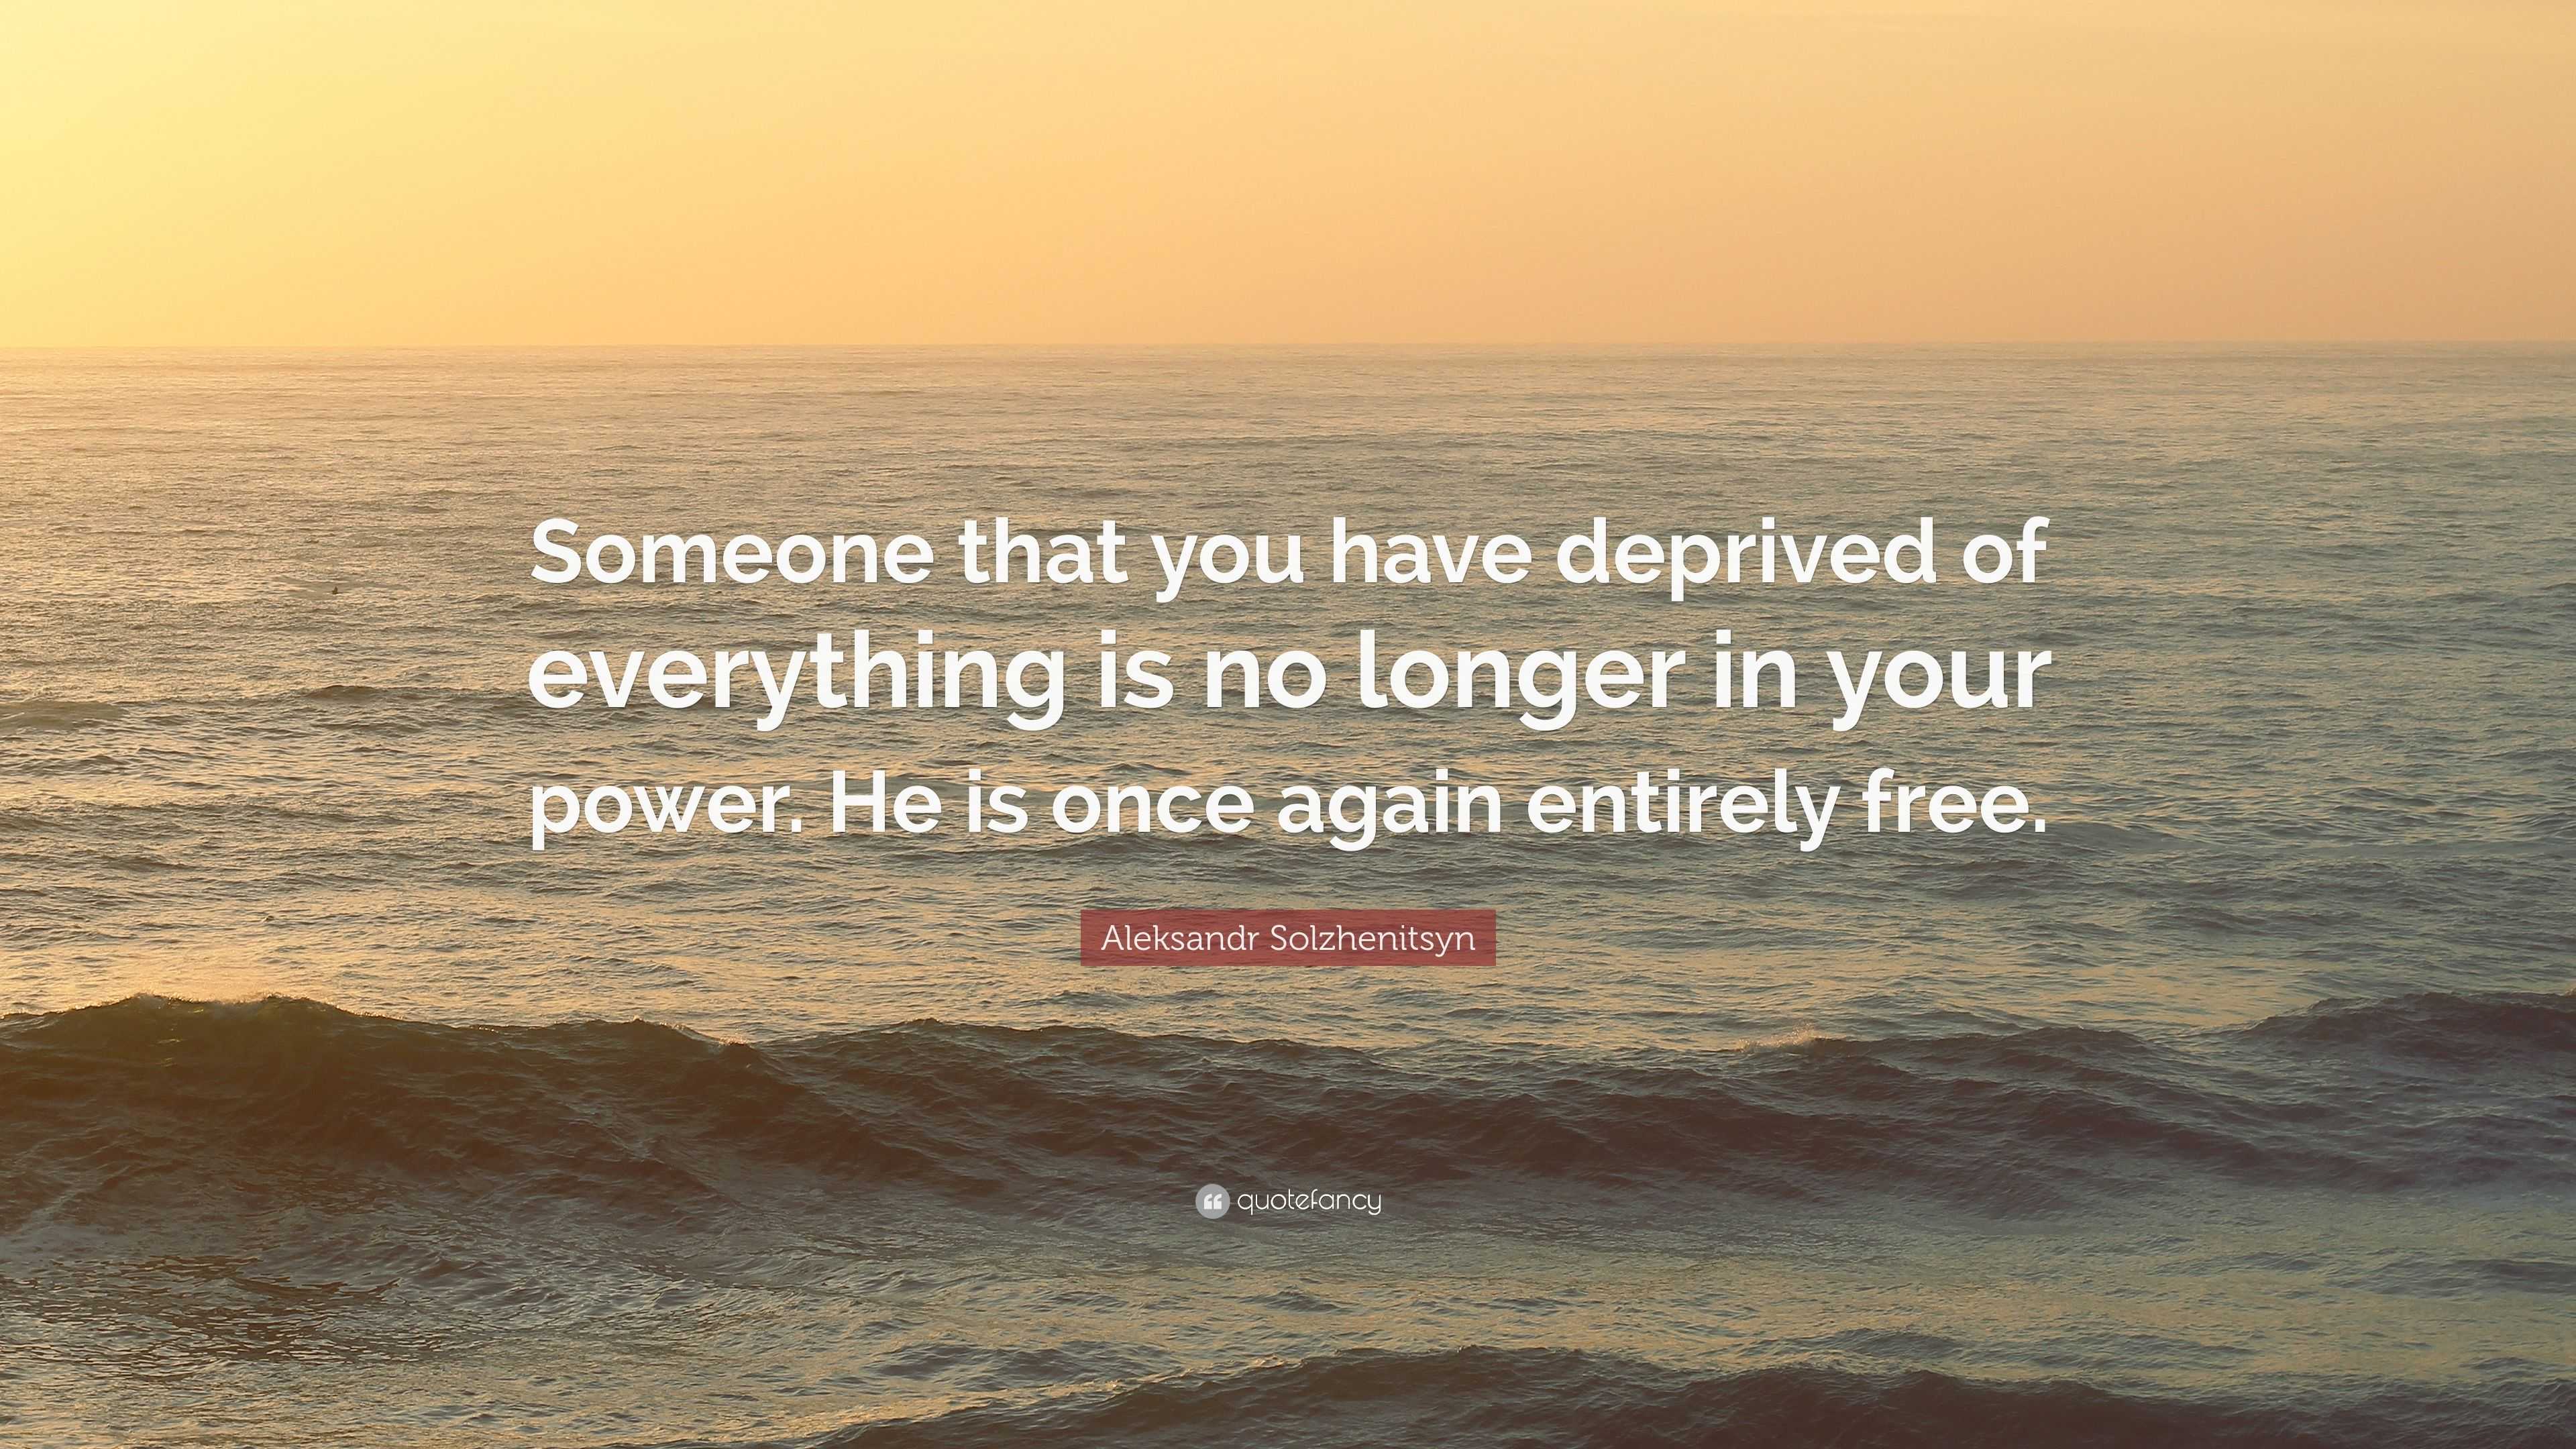 Aleksandr Solzhenitsyn Quote: “Someone that you have deprived of ...